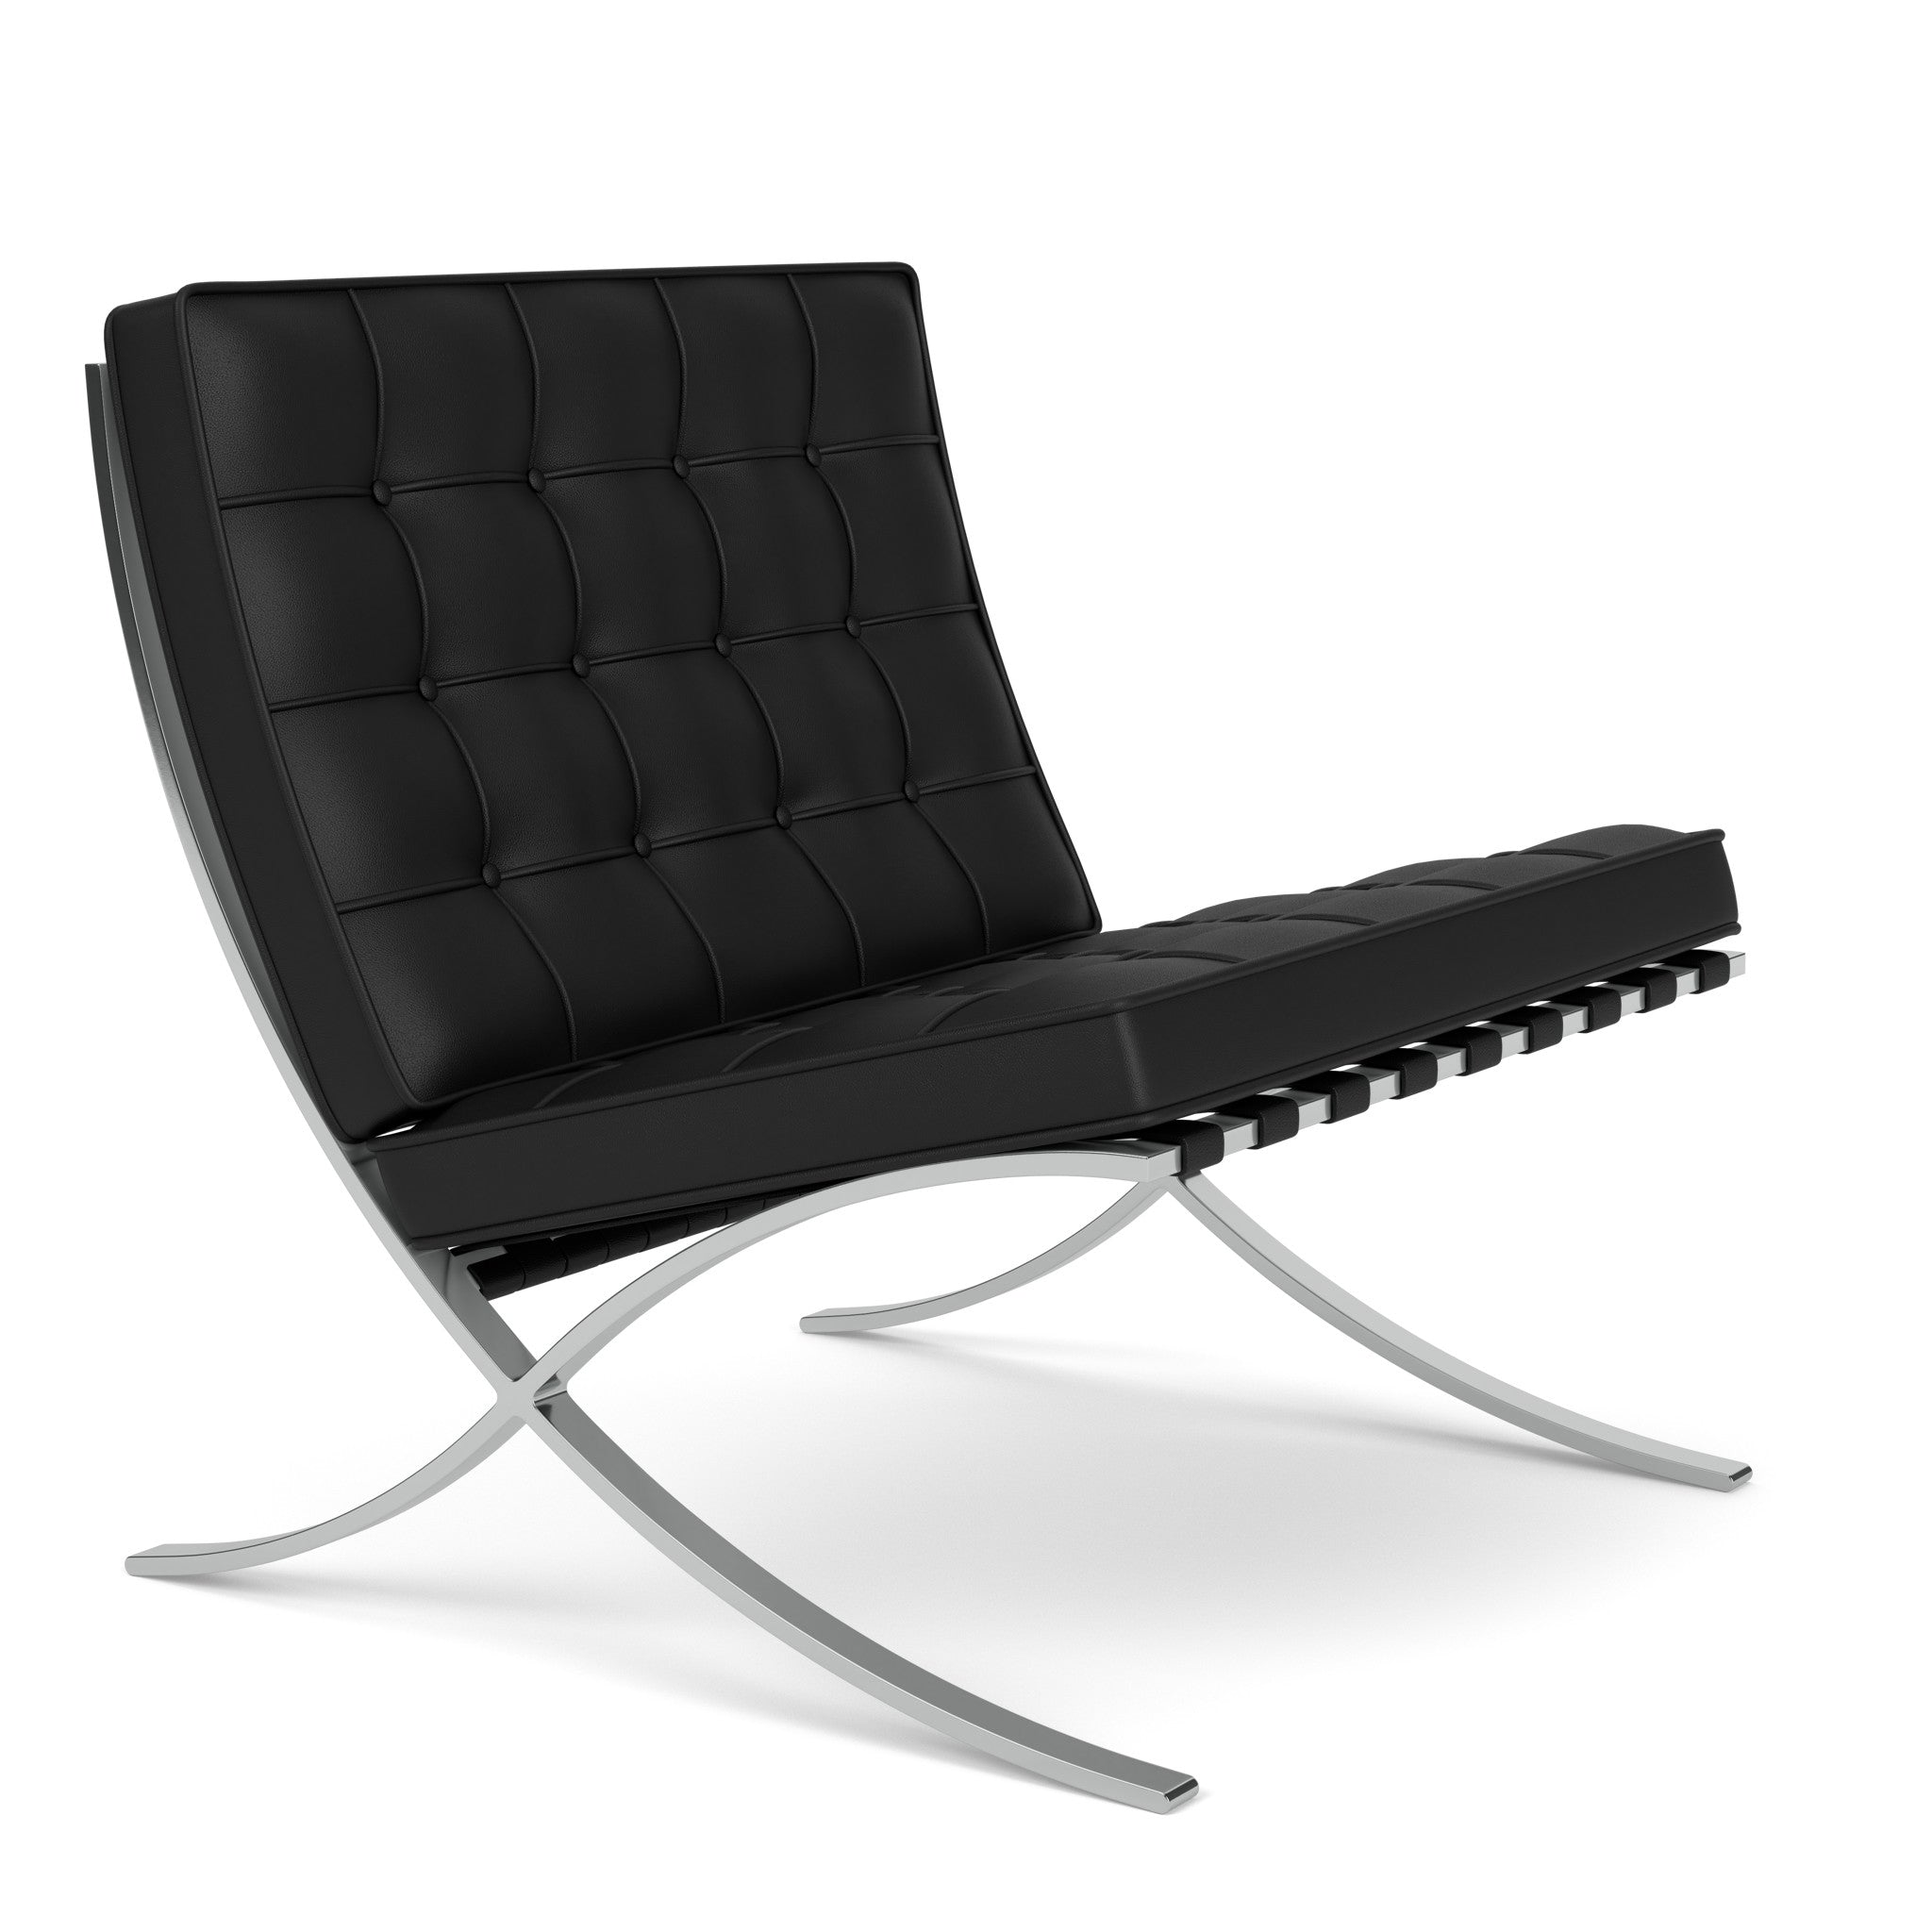 Knoll Relaxed Chair - 2Modern